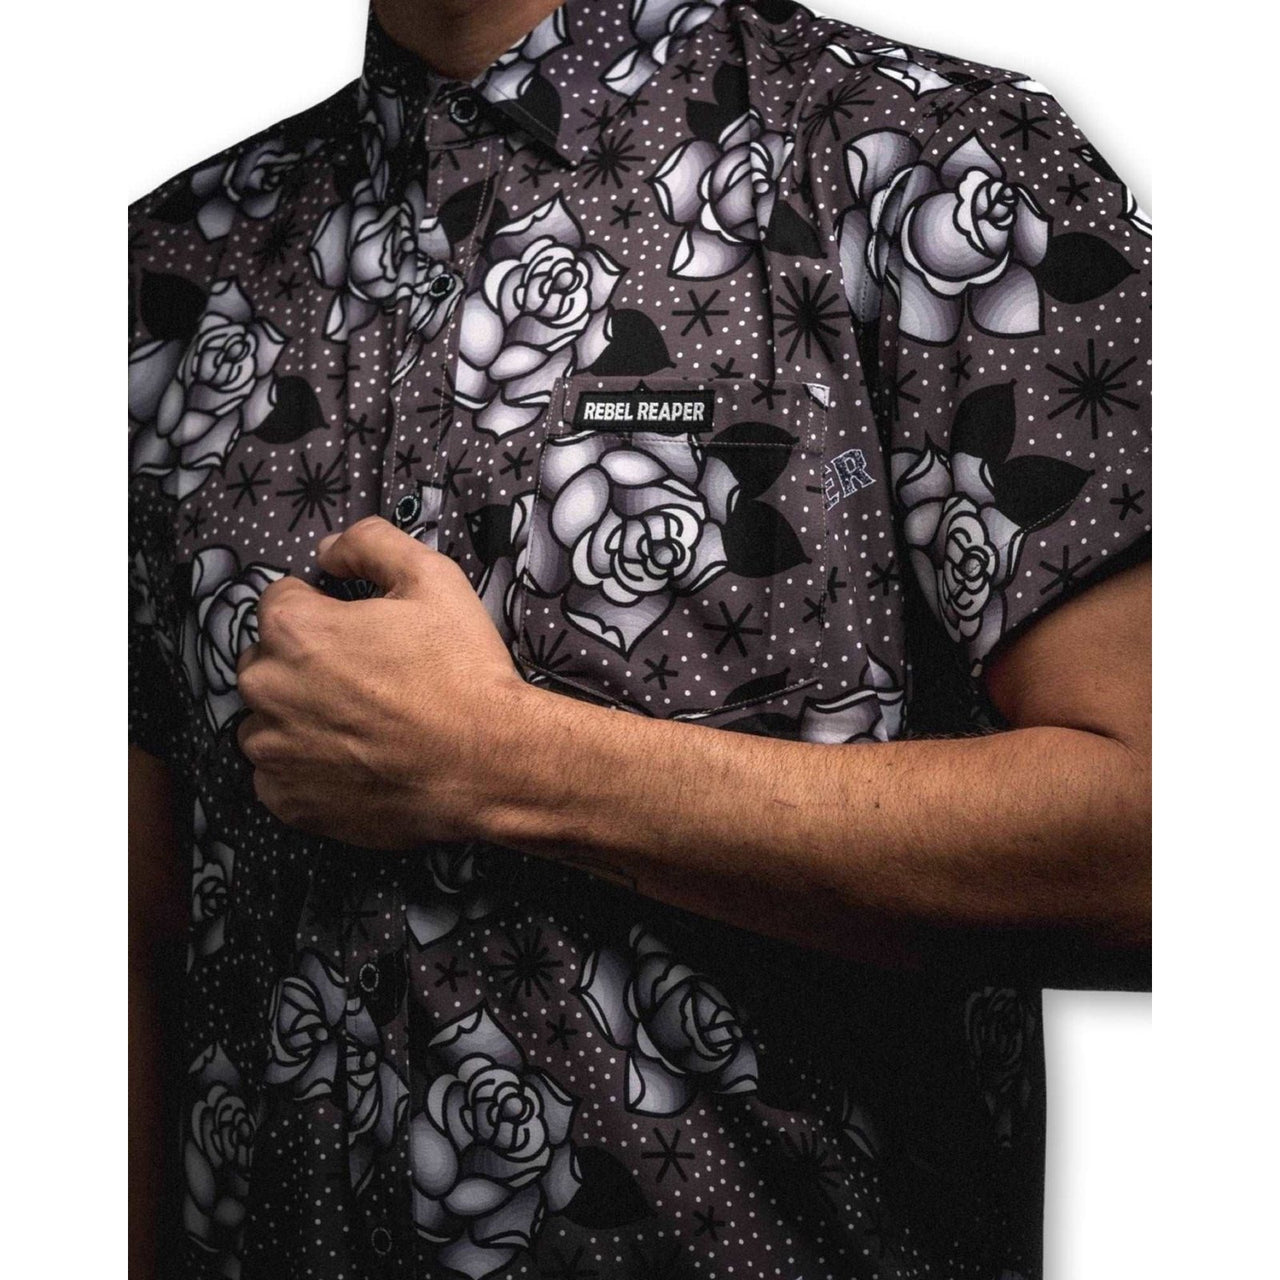 Chrome Flash of Roses Shirt - Rebel Reaper Clothing Company Button Up Shirt Men's